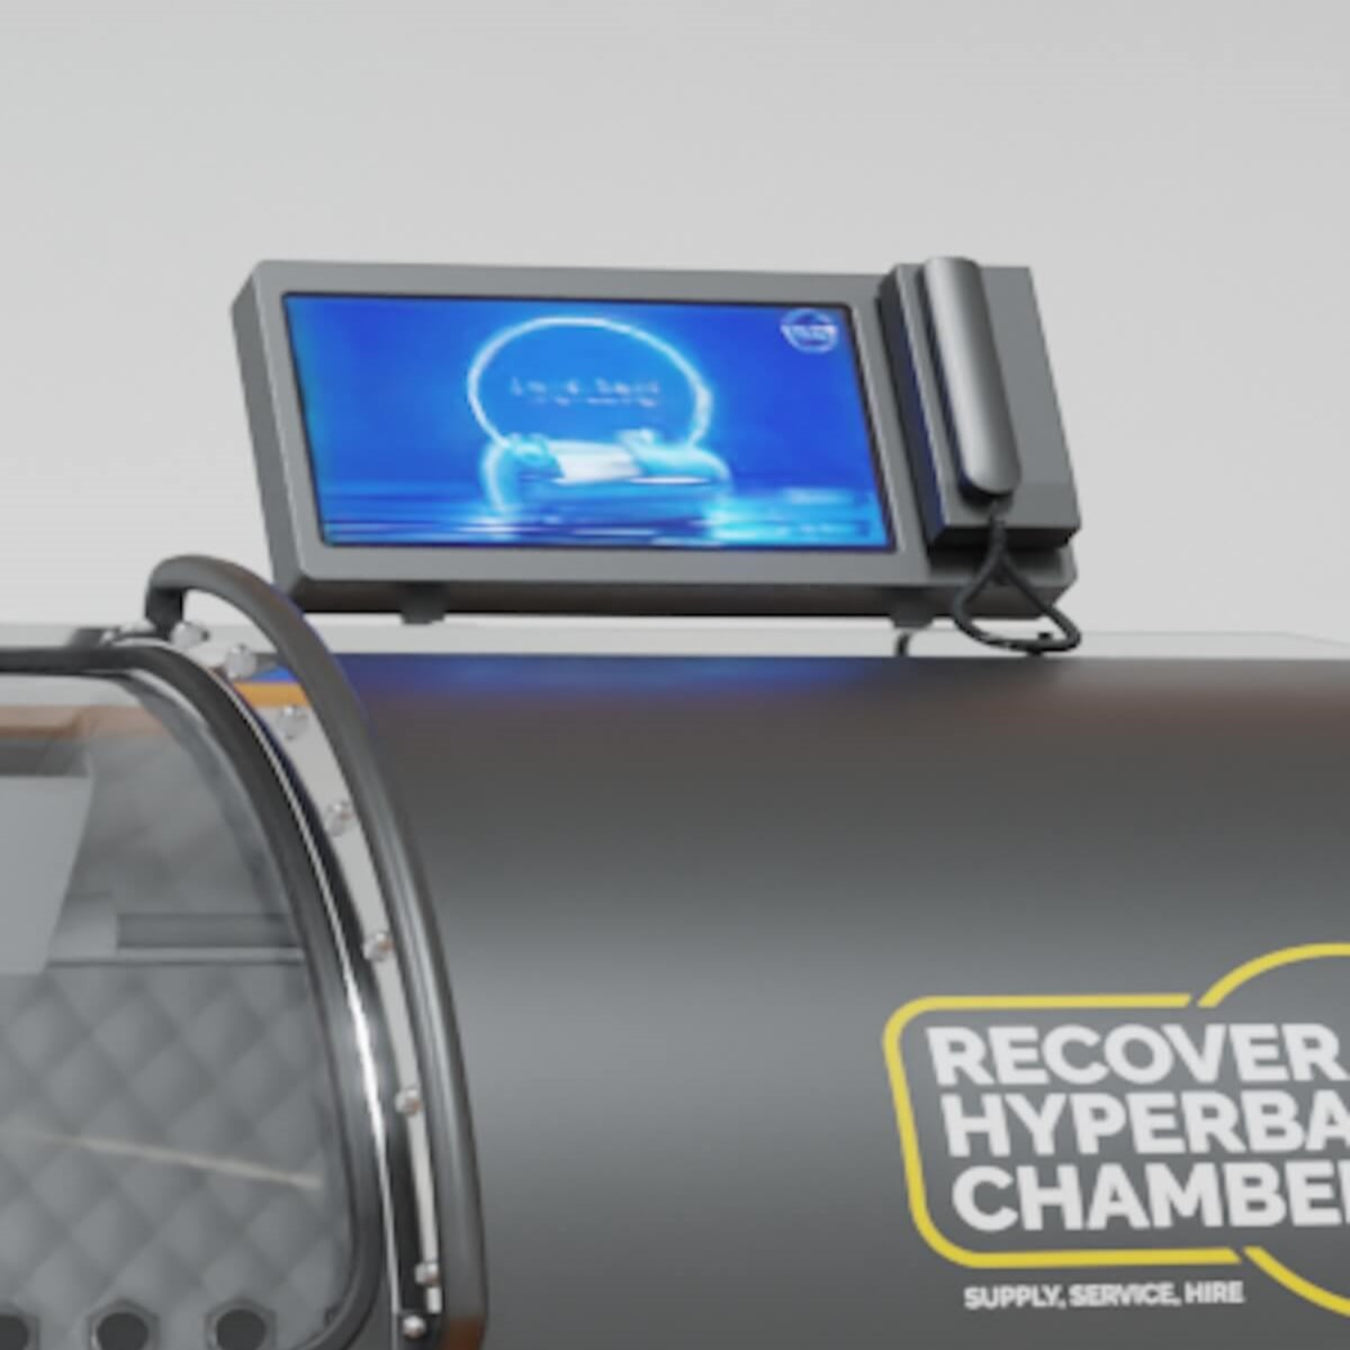 Recover hyperbaric chamber f range display screen